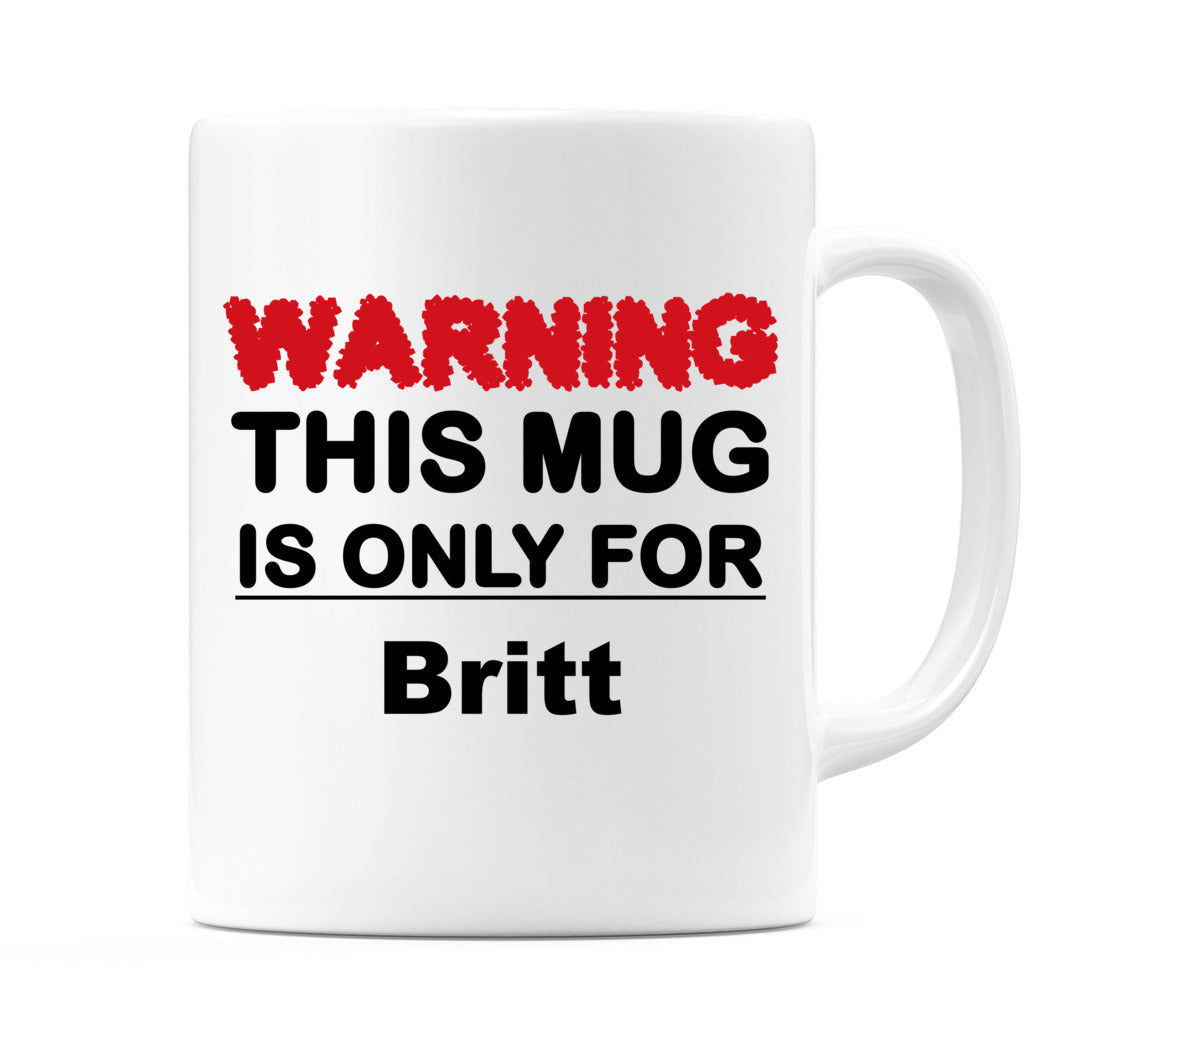 Warning This Mug is ONLY for Britt Mug